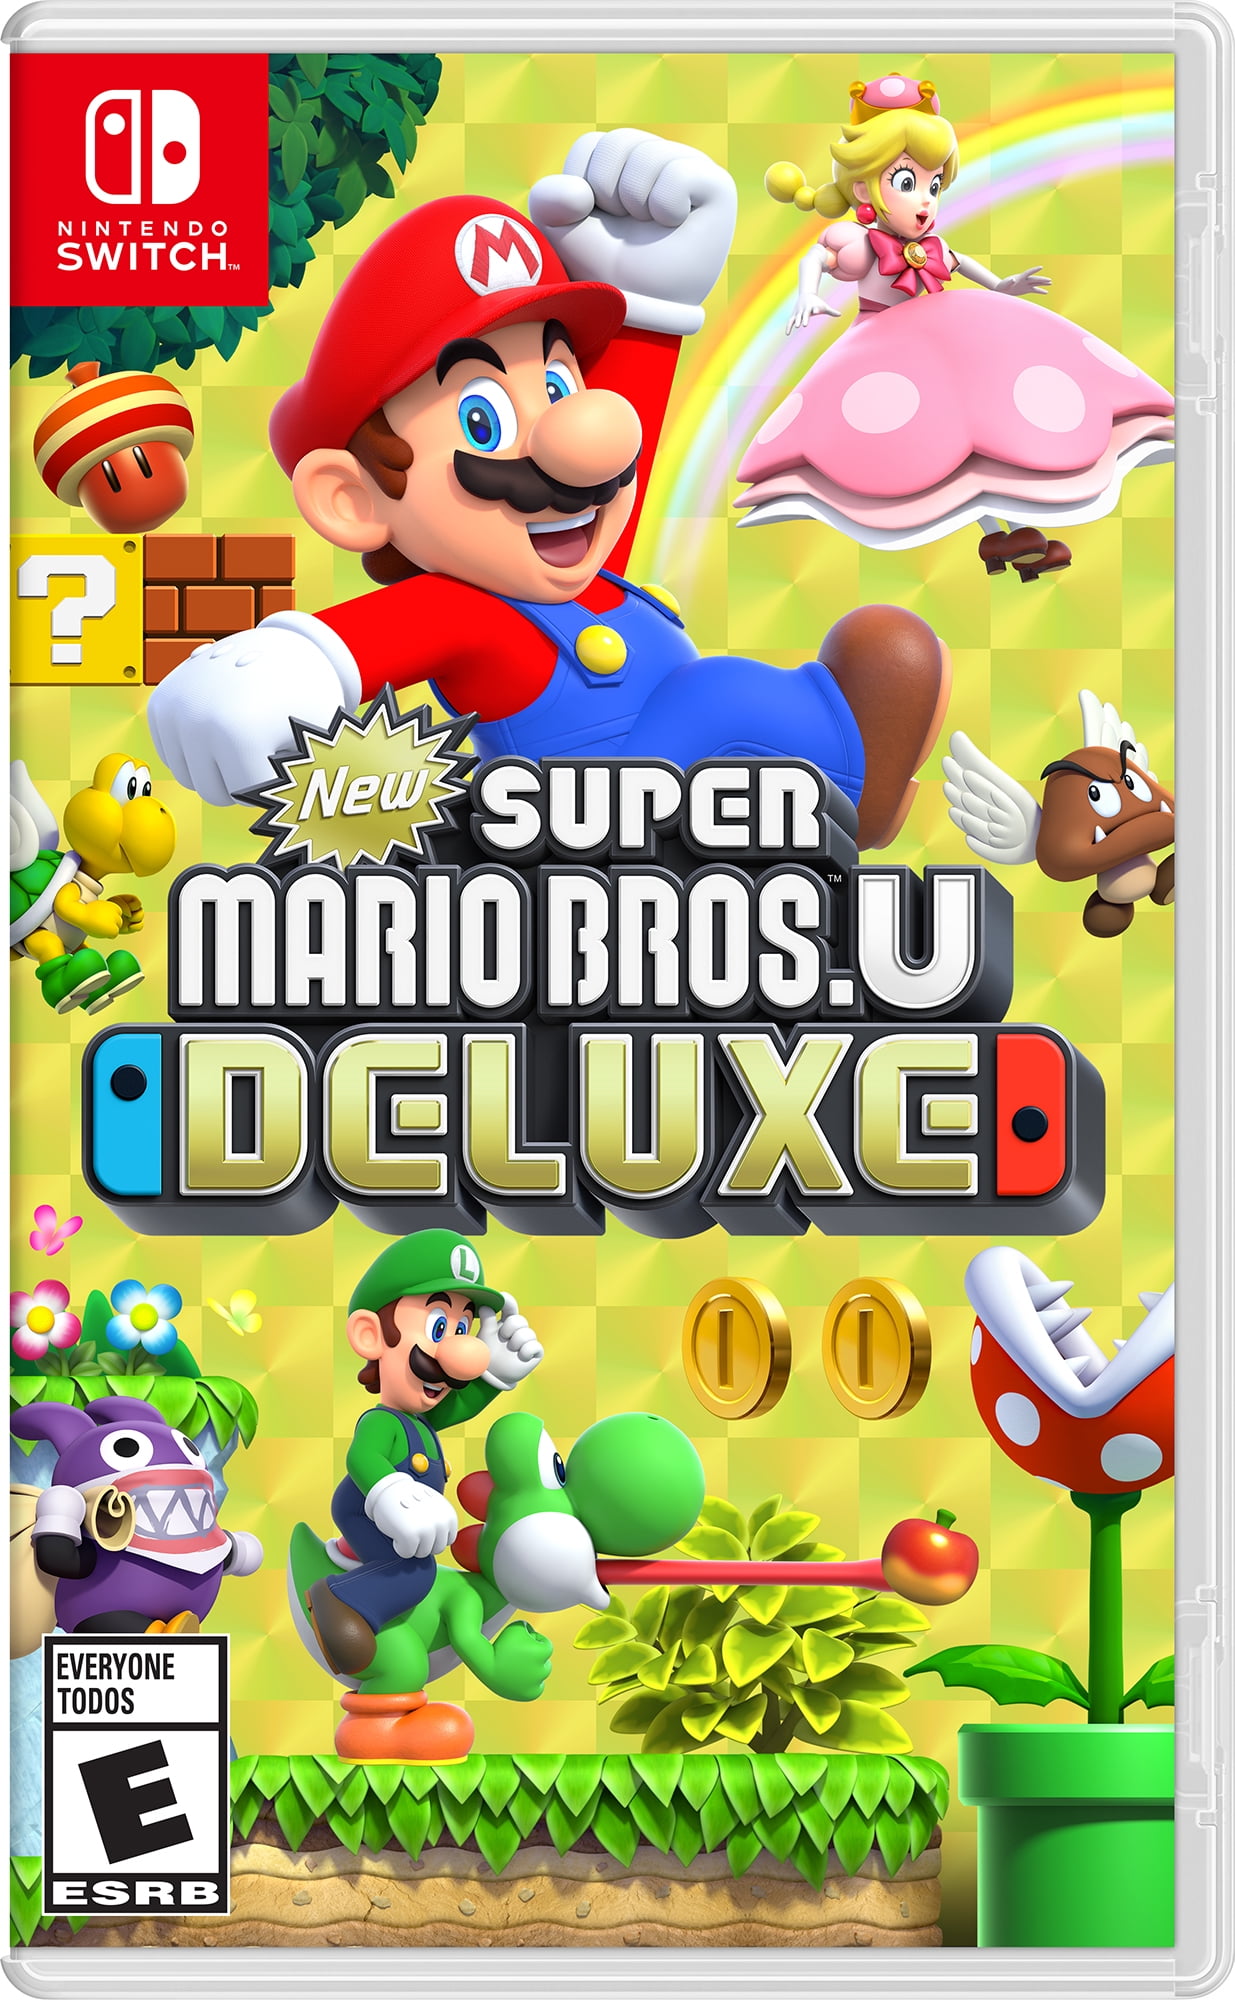 SNES Switch Online - Super Mario World Online Co-Op: Special